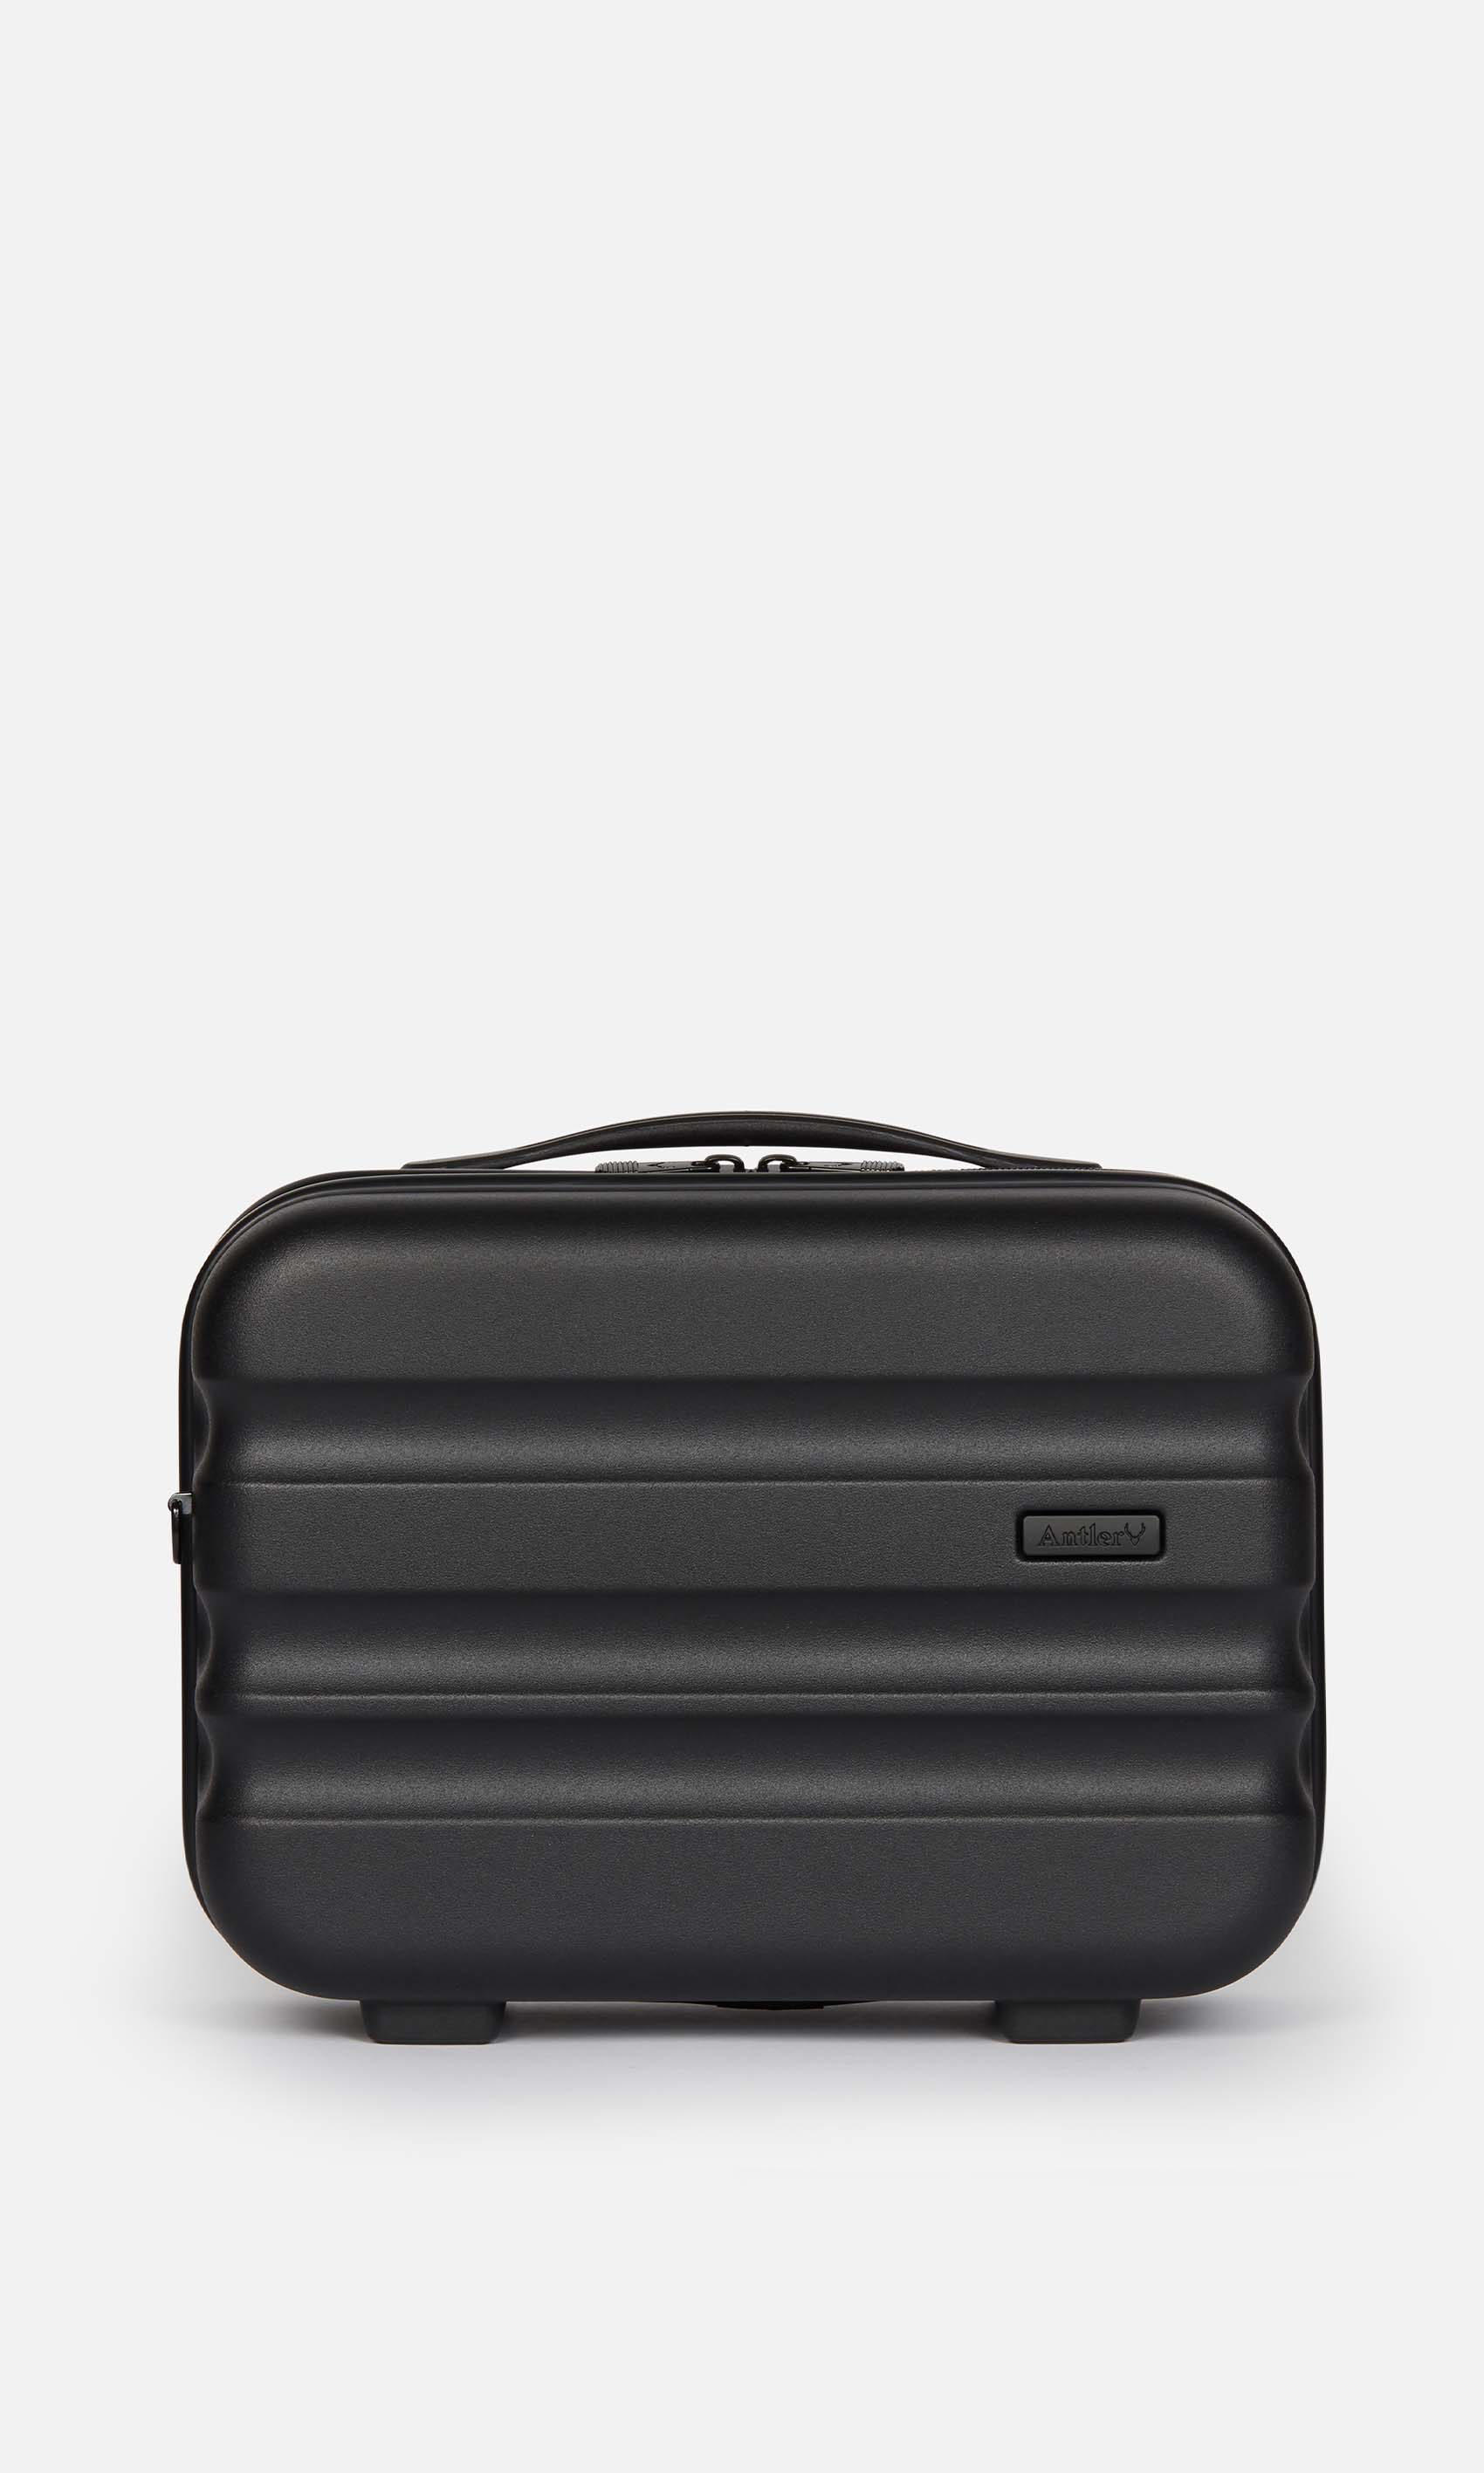 Antler Luggage -  Clifton vanity case in black - Hard Suitcases Clifton Vanity Case Black | Travel Accessories & Gifts | Antler 